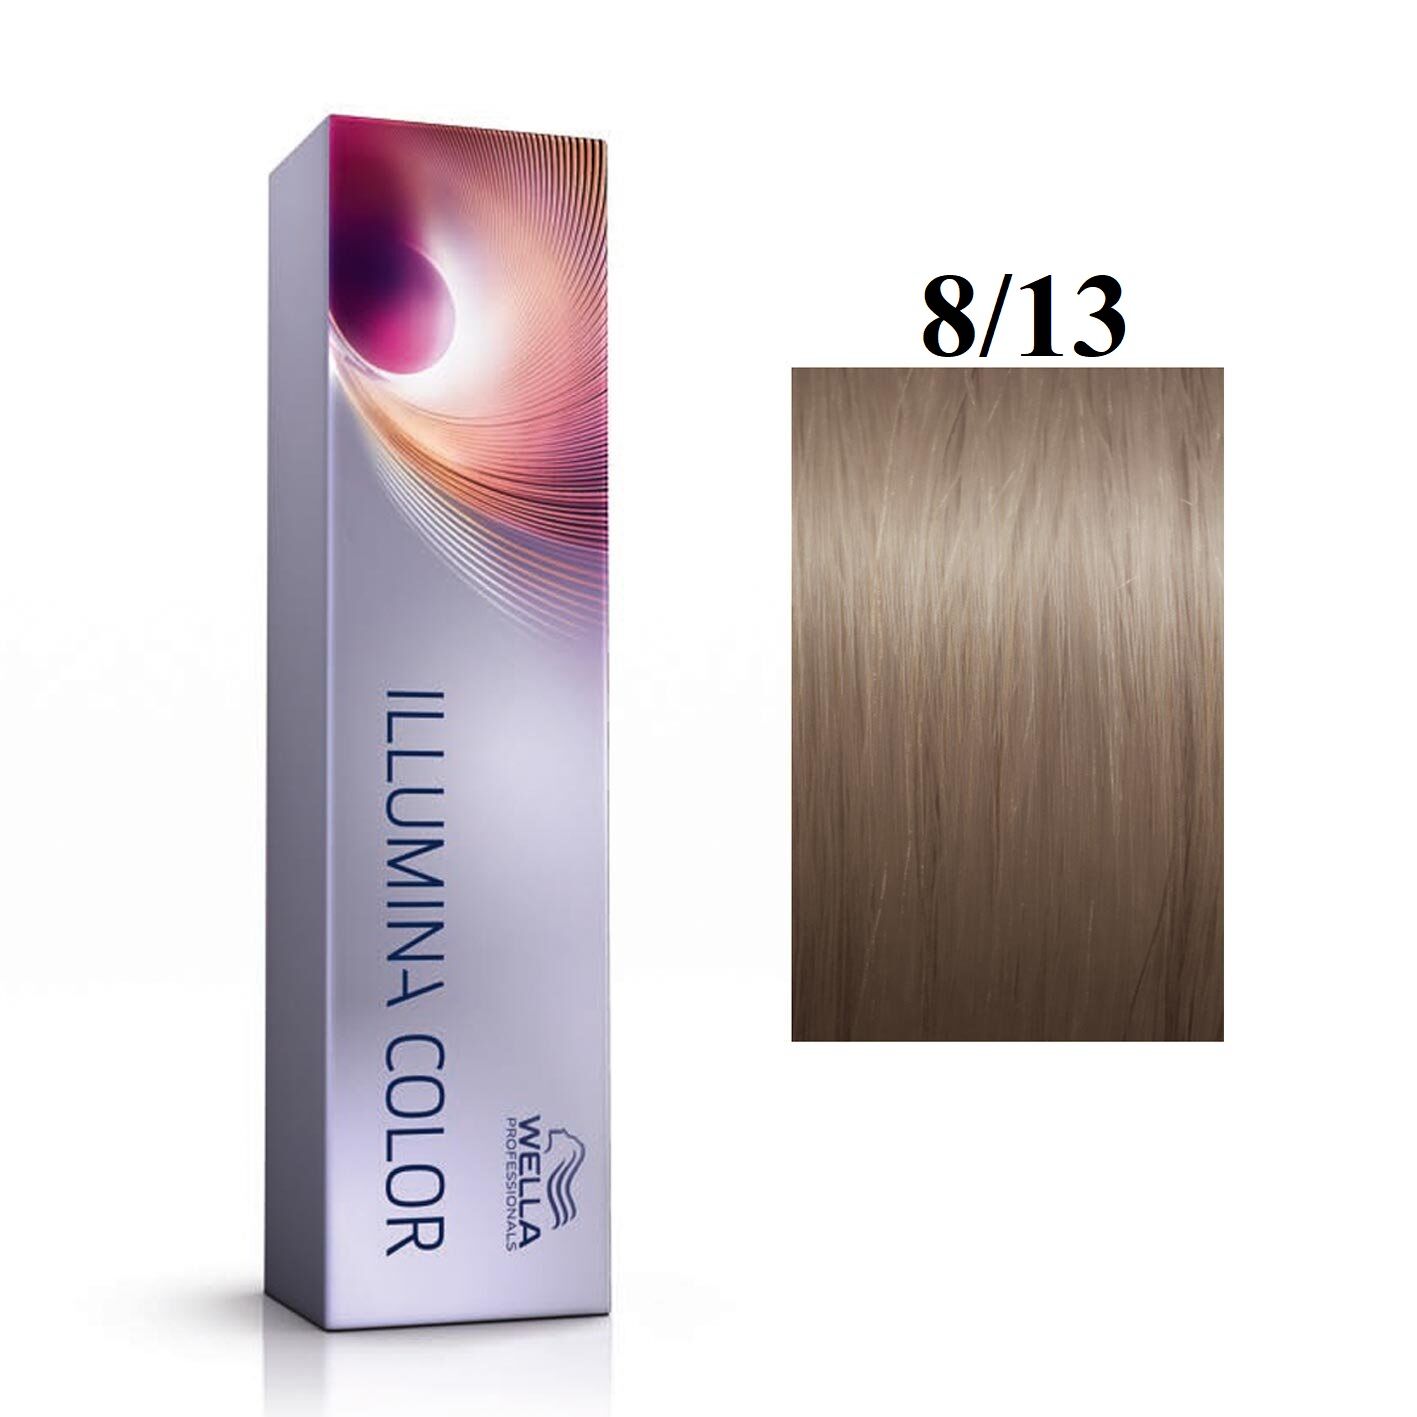 Wella Professionals Illumina Color Saç Boyası 60 Ml. - 8/13